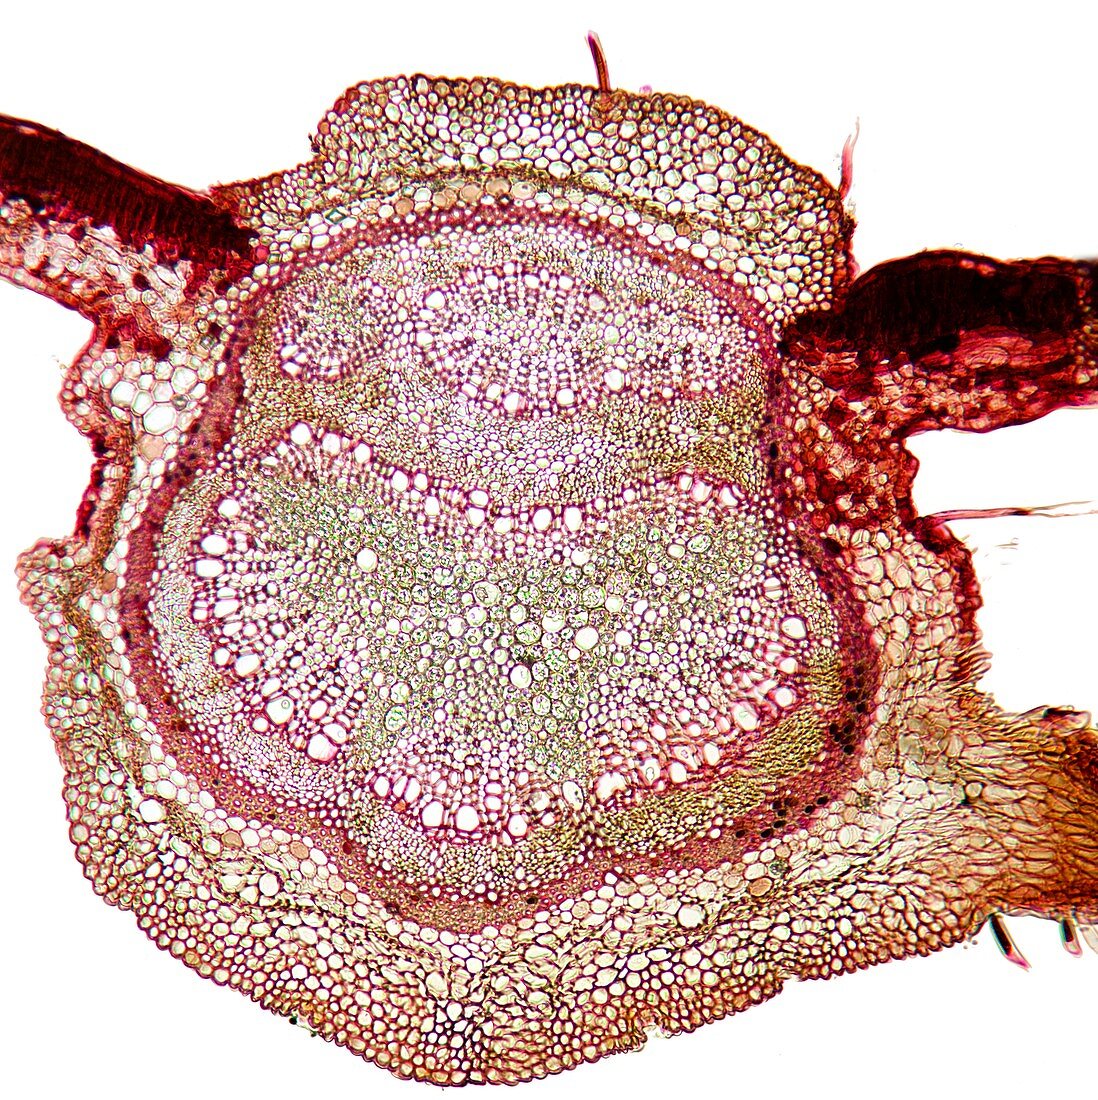 Beech tree leaf,light micrograph